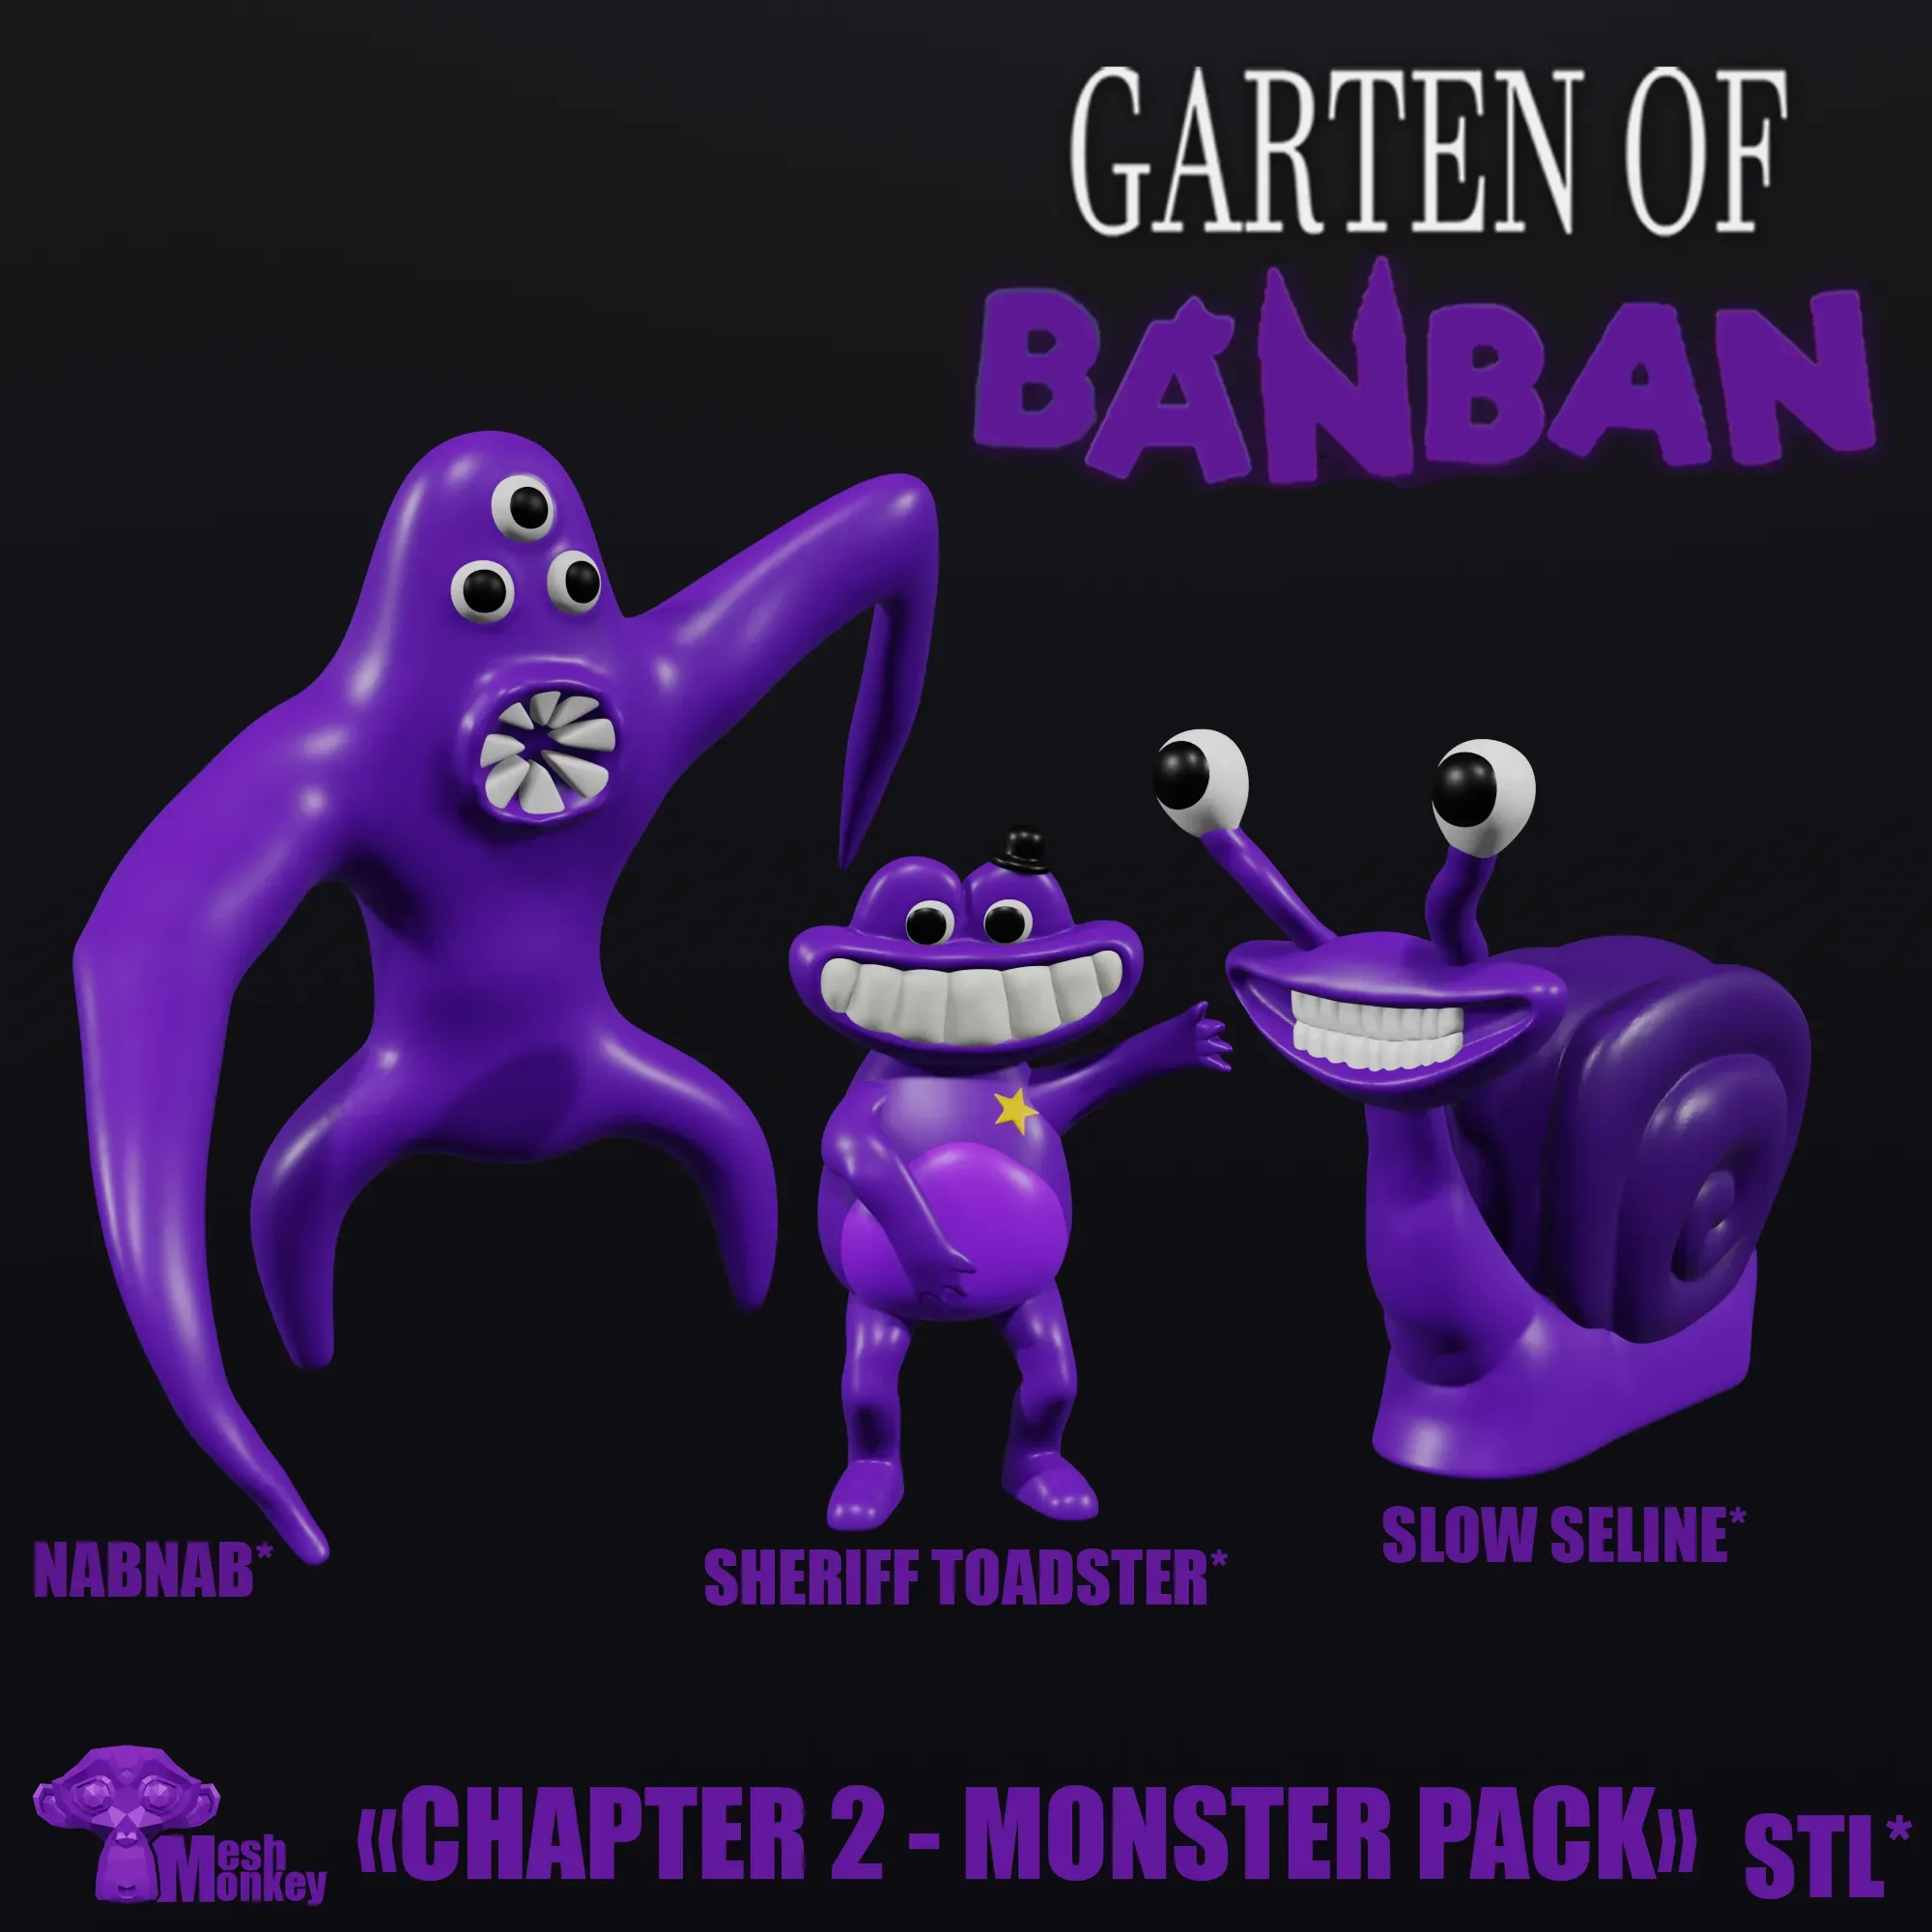 NABNAB FROM GARTEN OF BANBAN 3 FAN ART V.2 | BGGT